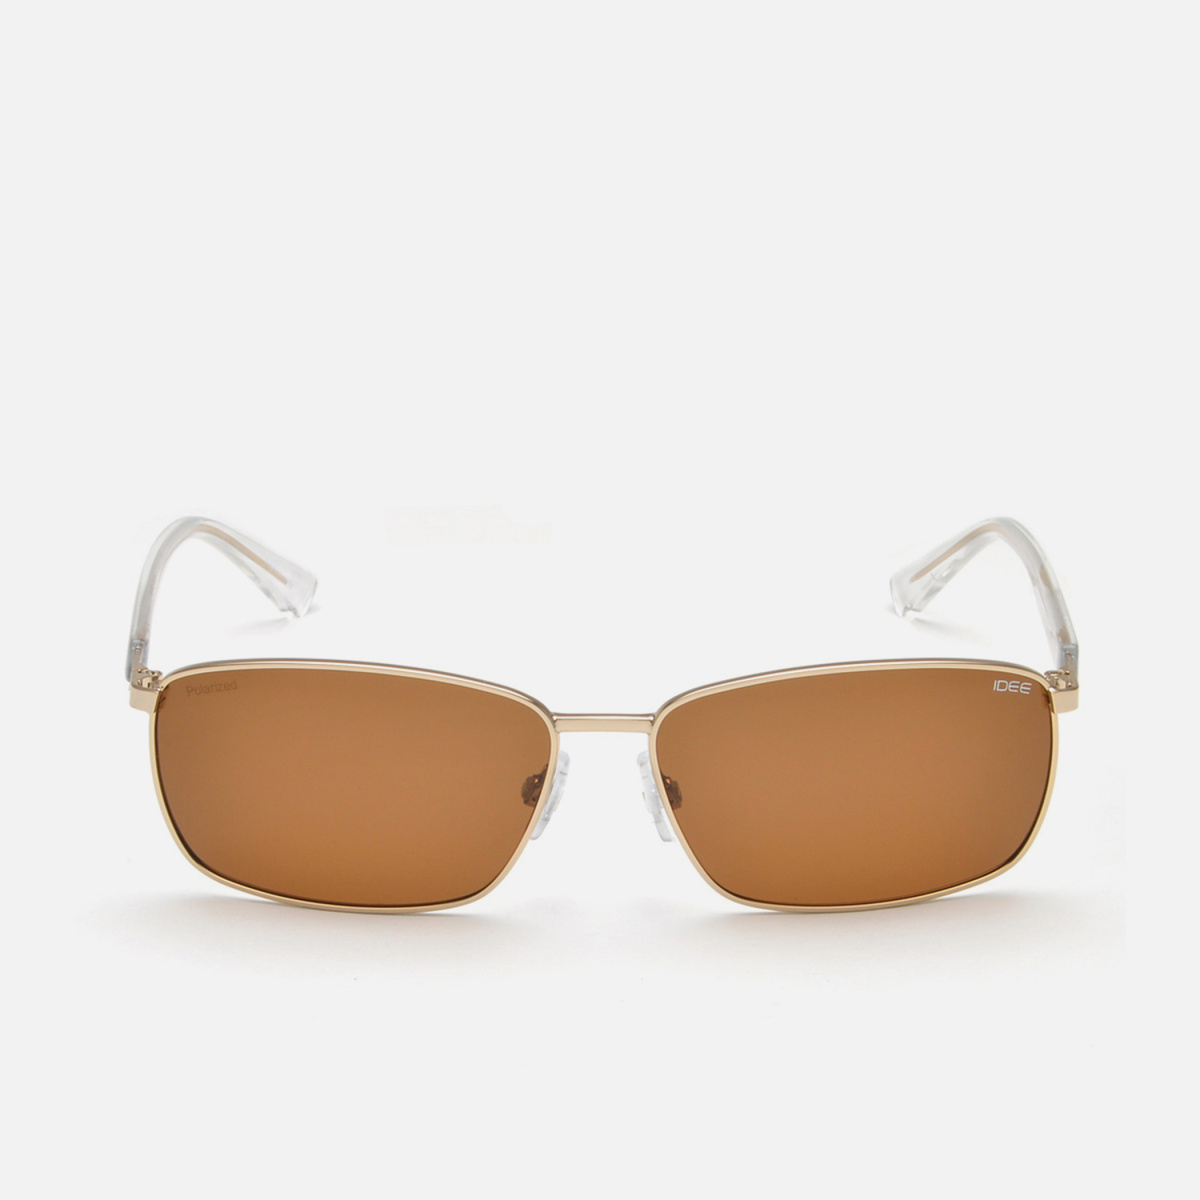 IDEE Men UV-Protected Rectangle Sunglasses - IDS2759C2P59